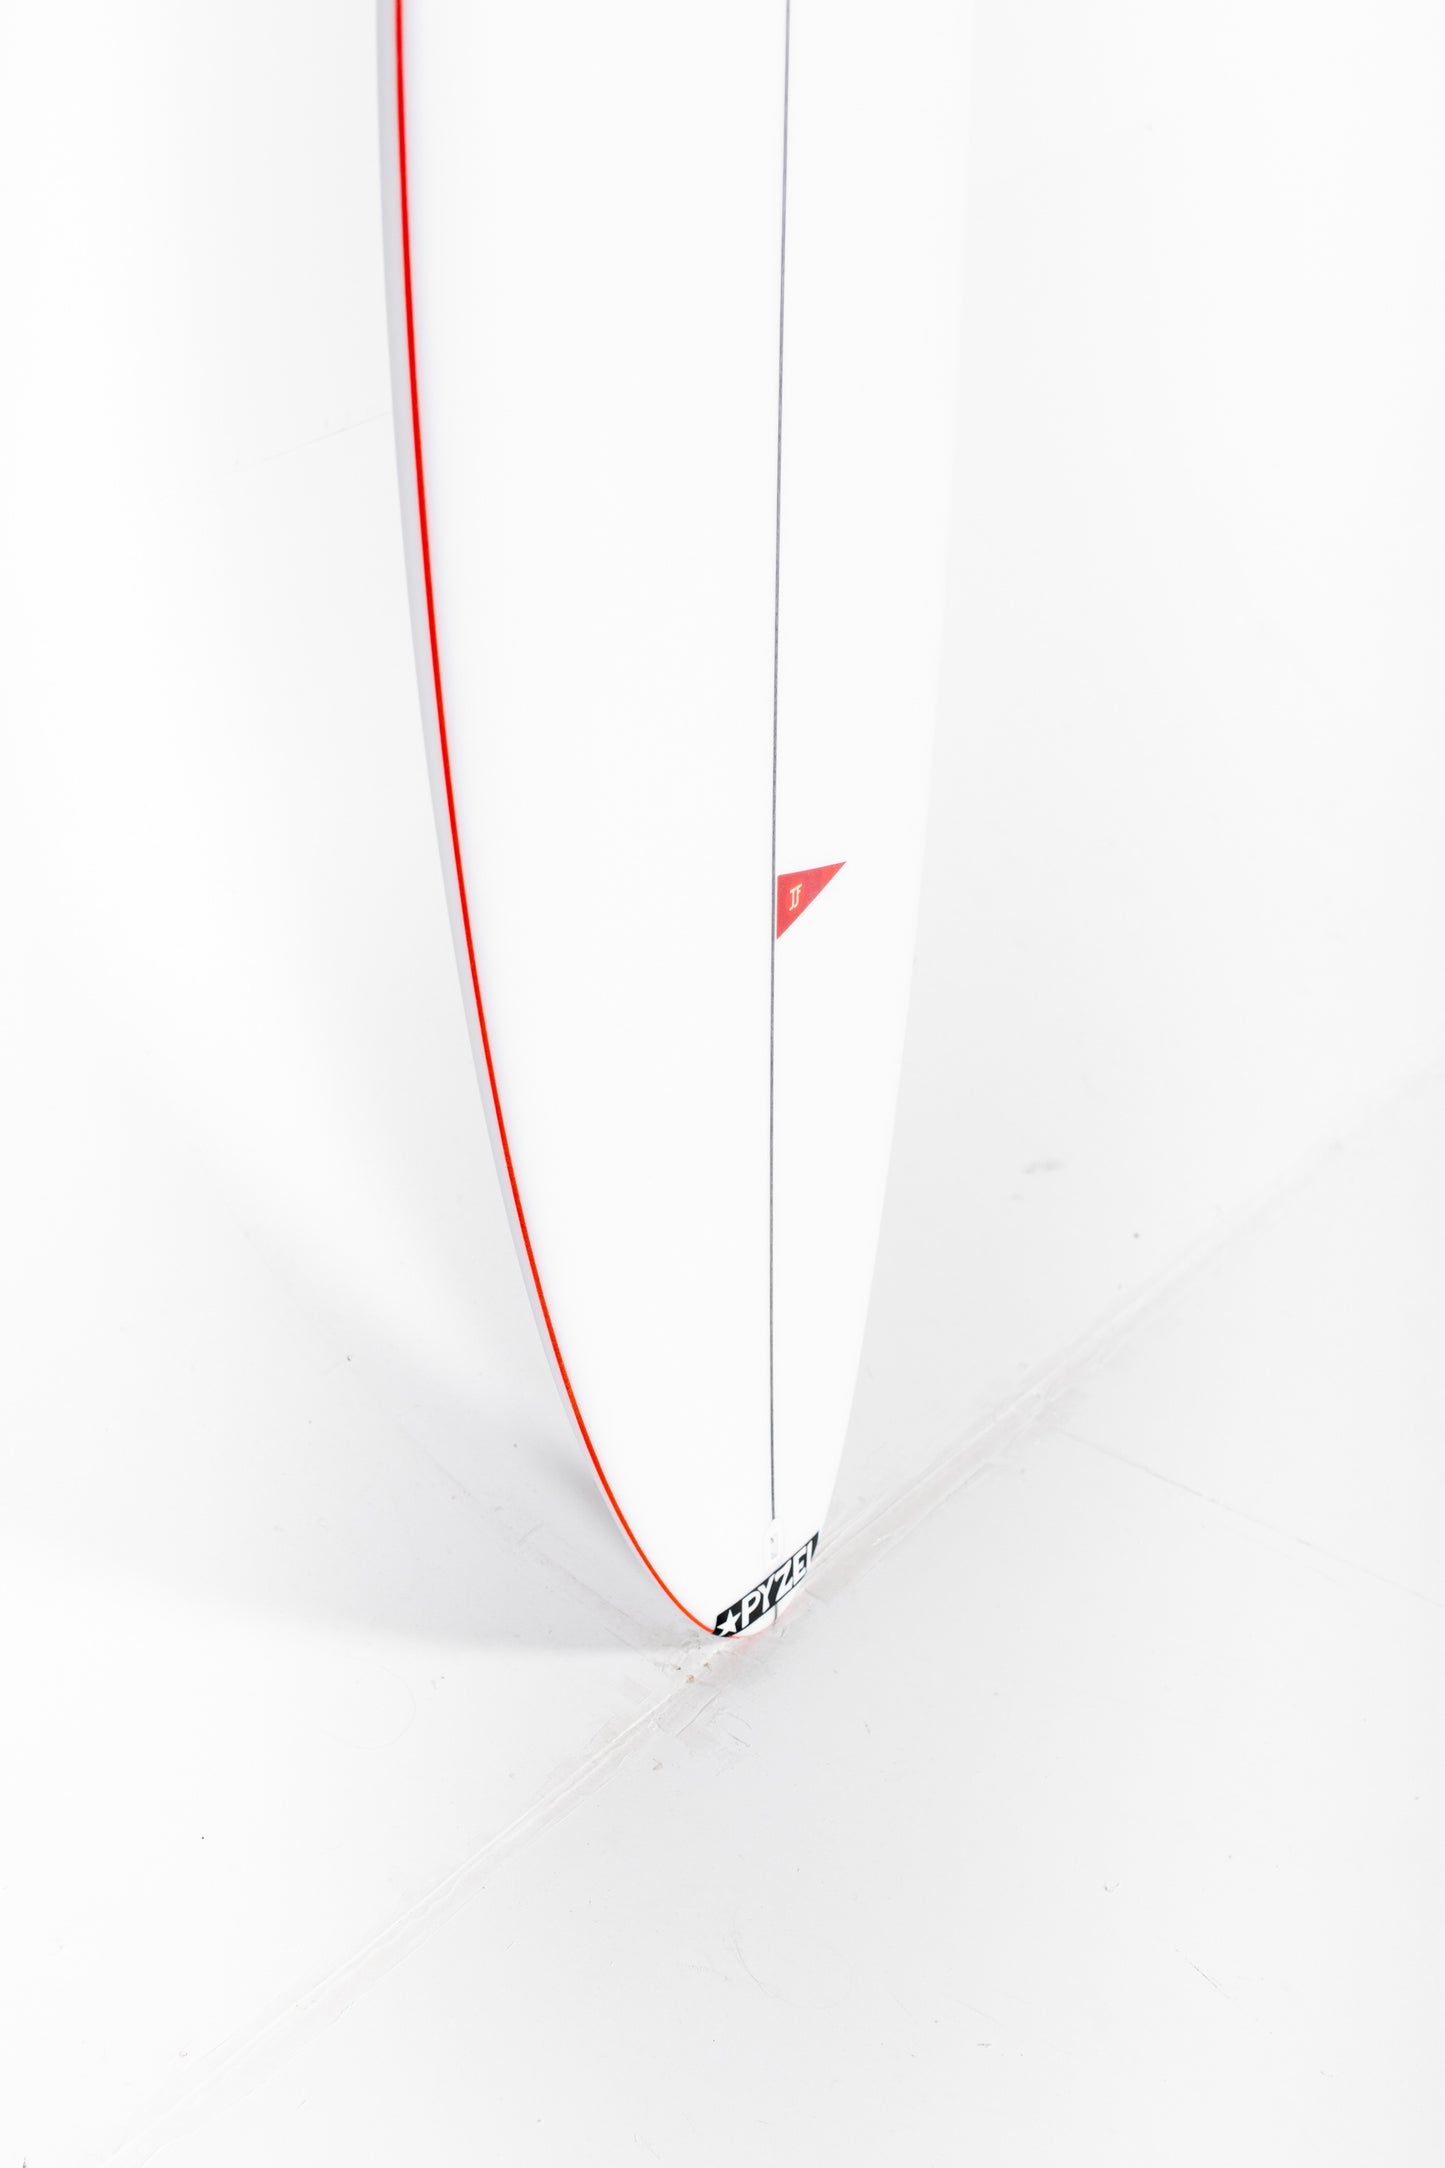 
                  
                    Pukas Surf shop - Pyzel Surfboards - GHOST - 6'0" x 19 3/8 x 2 9/16 - 29,9L - Ref: 555328
                  
                